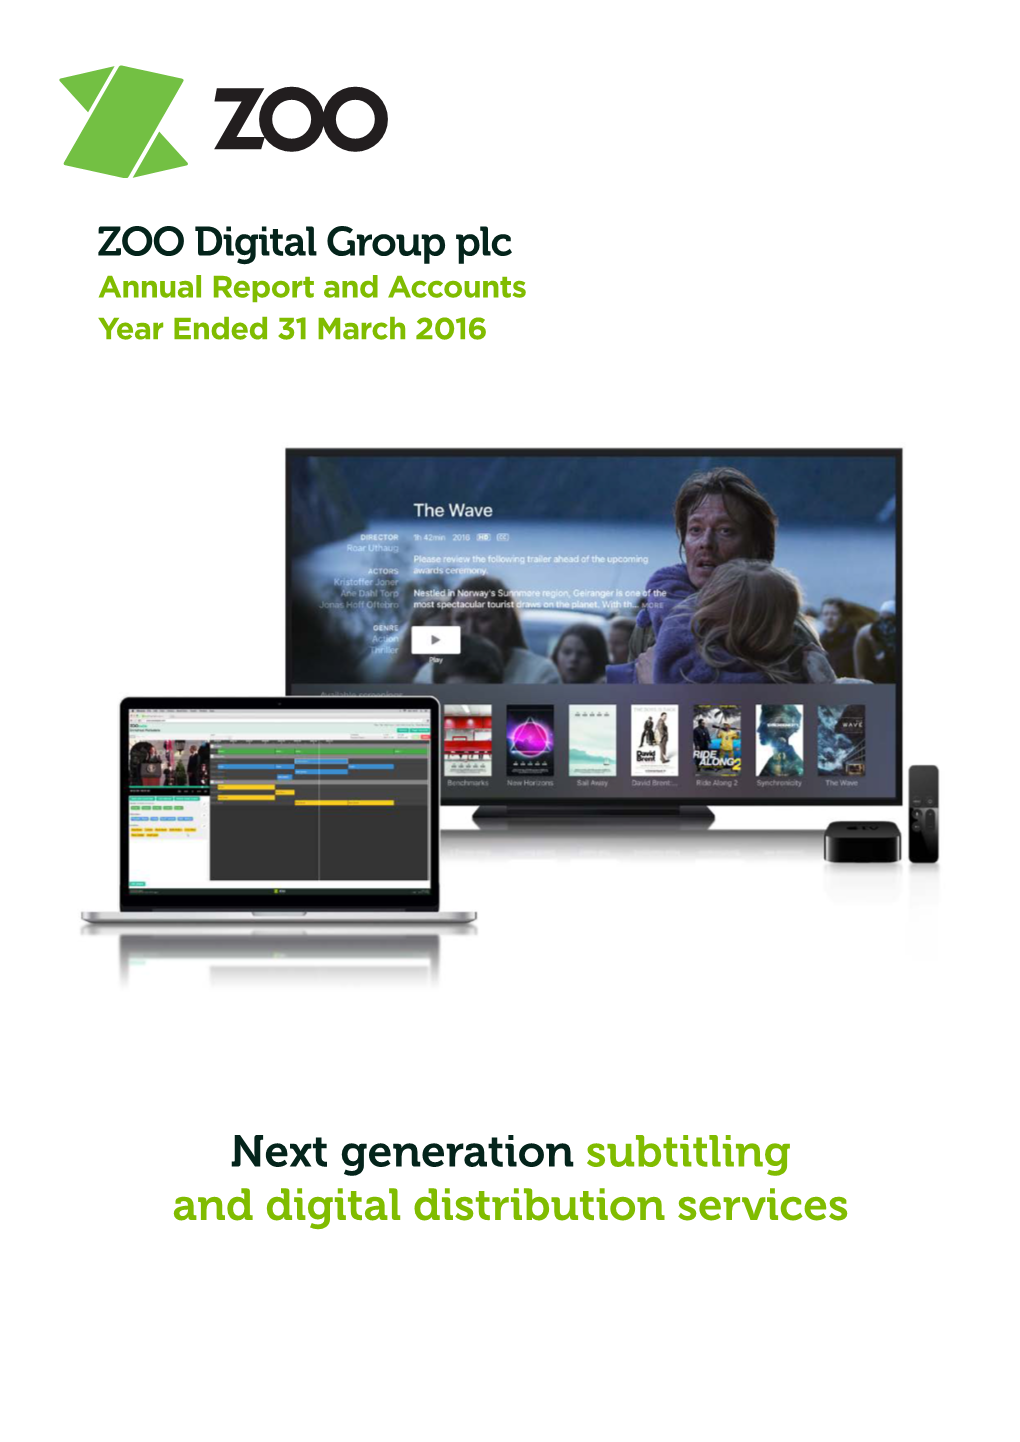 Next Generation Subtitling and Digital Distribution Services